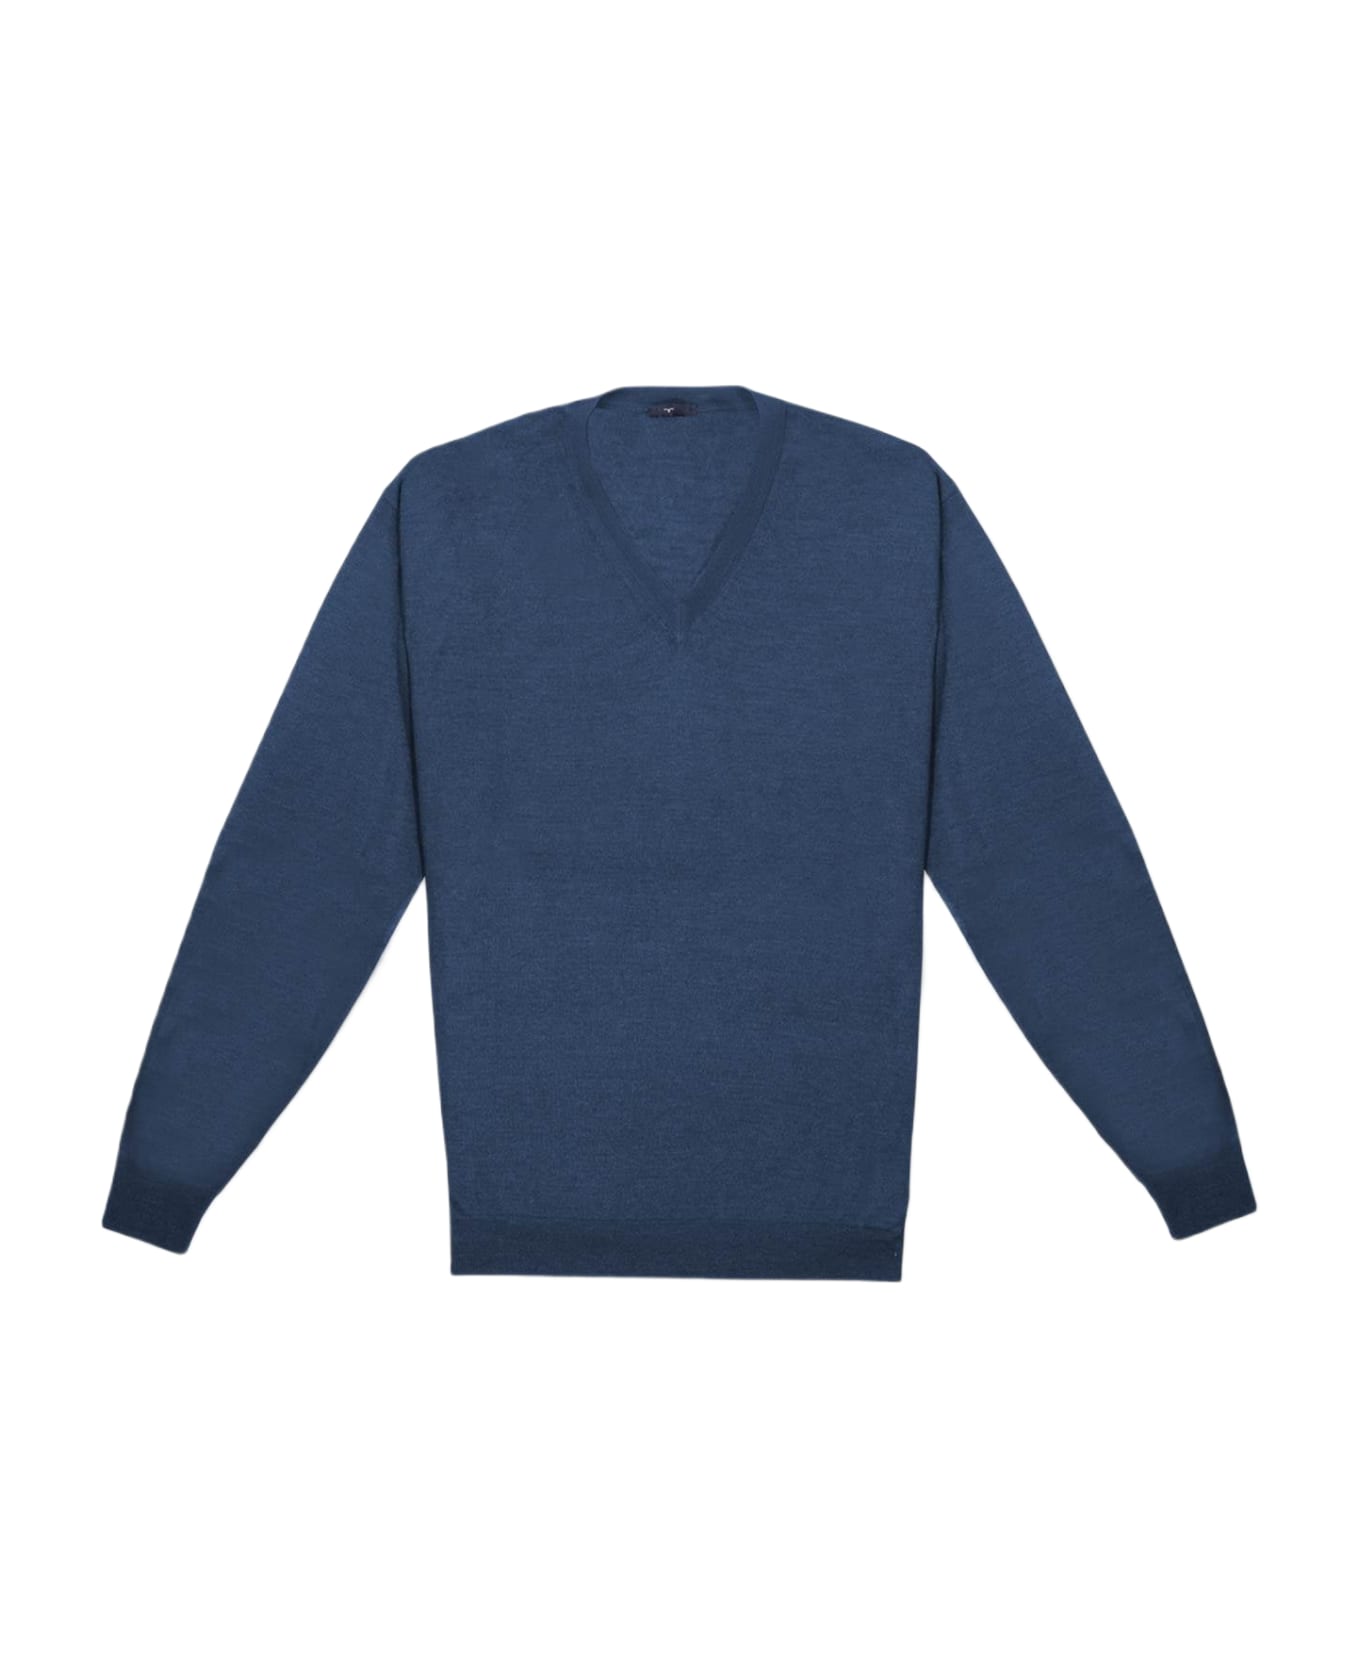 Larusmiani V-neck Sweater 'pullman' Sweater - Blue